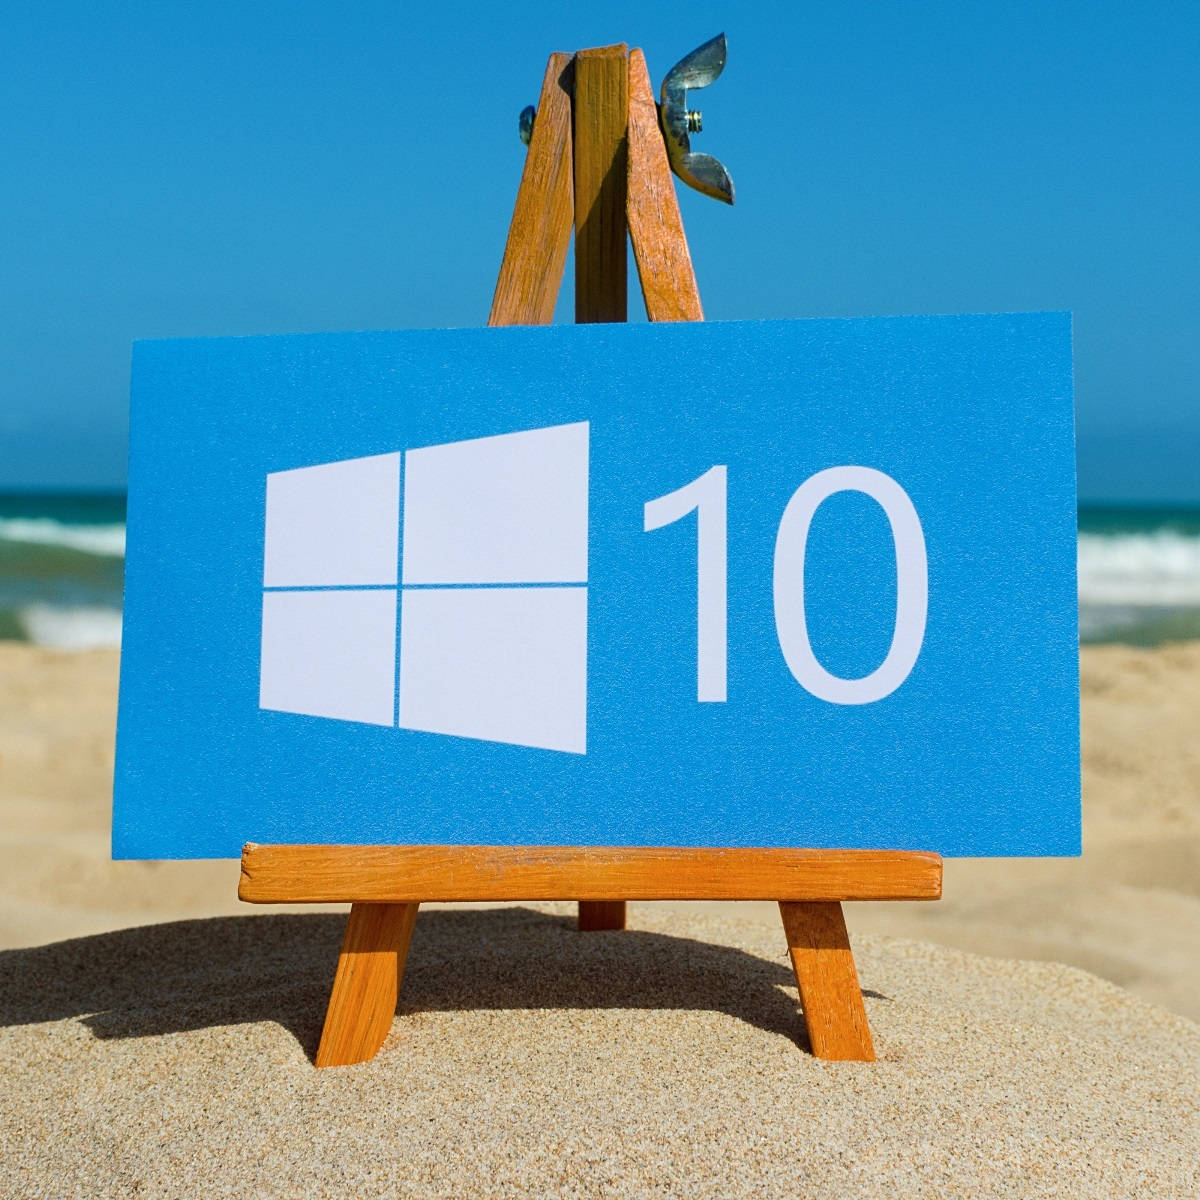 Windows 10 Photos crash bug